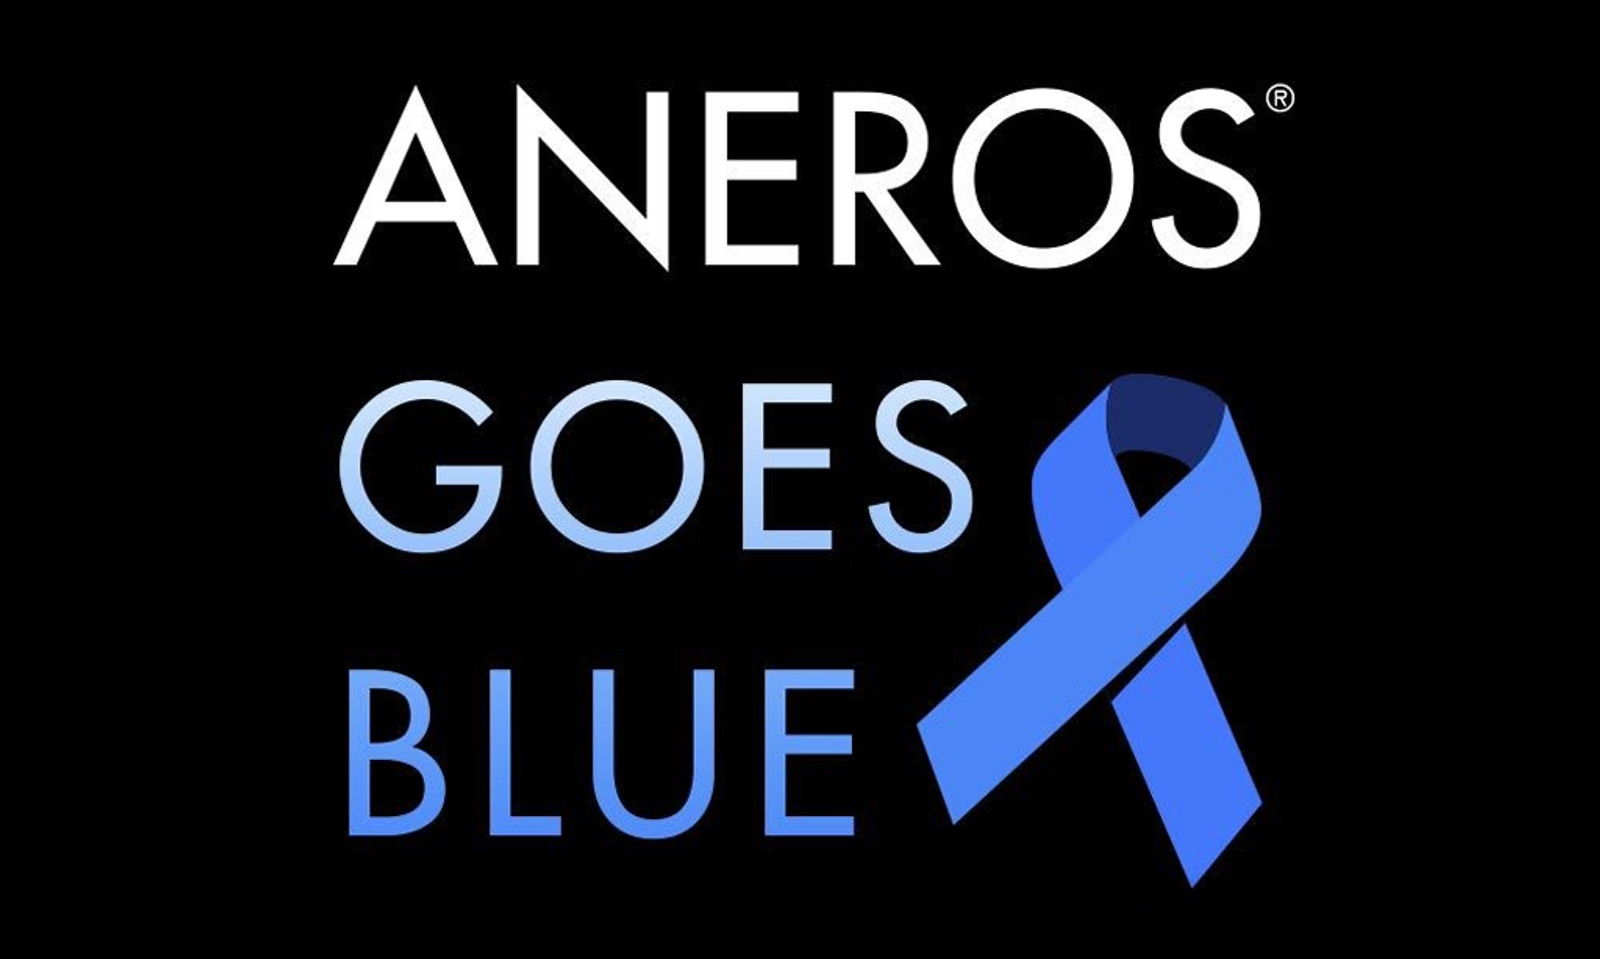 Aneros Debuts the 2022 Aneros Goes Blue Retail Kit